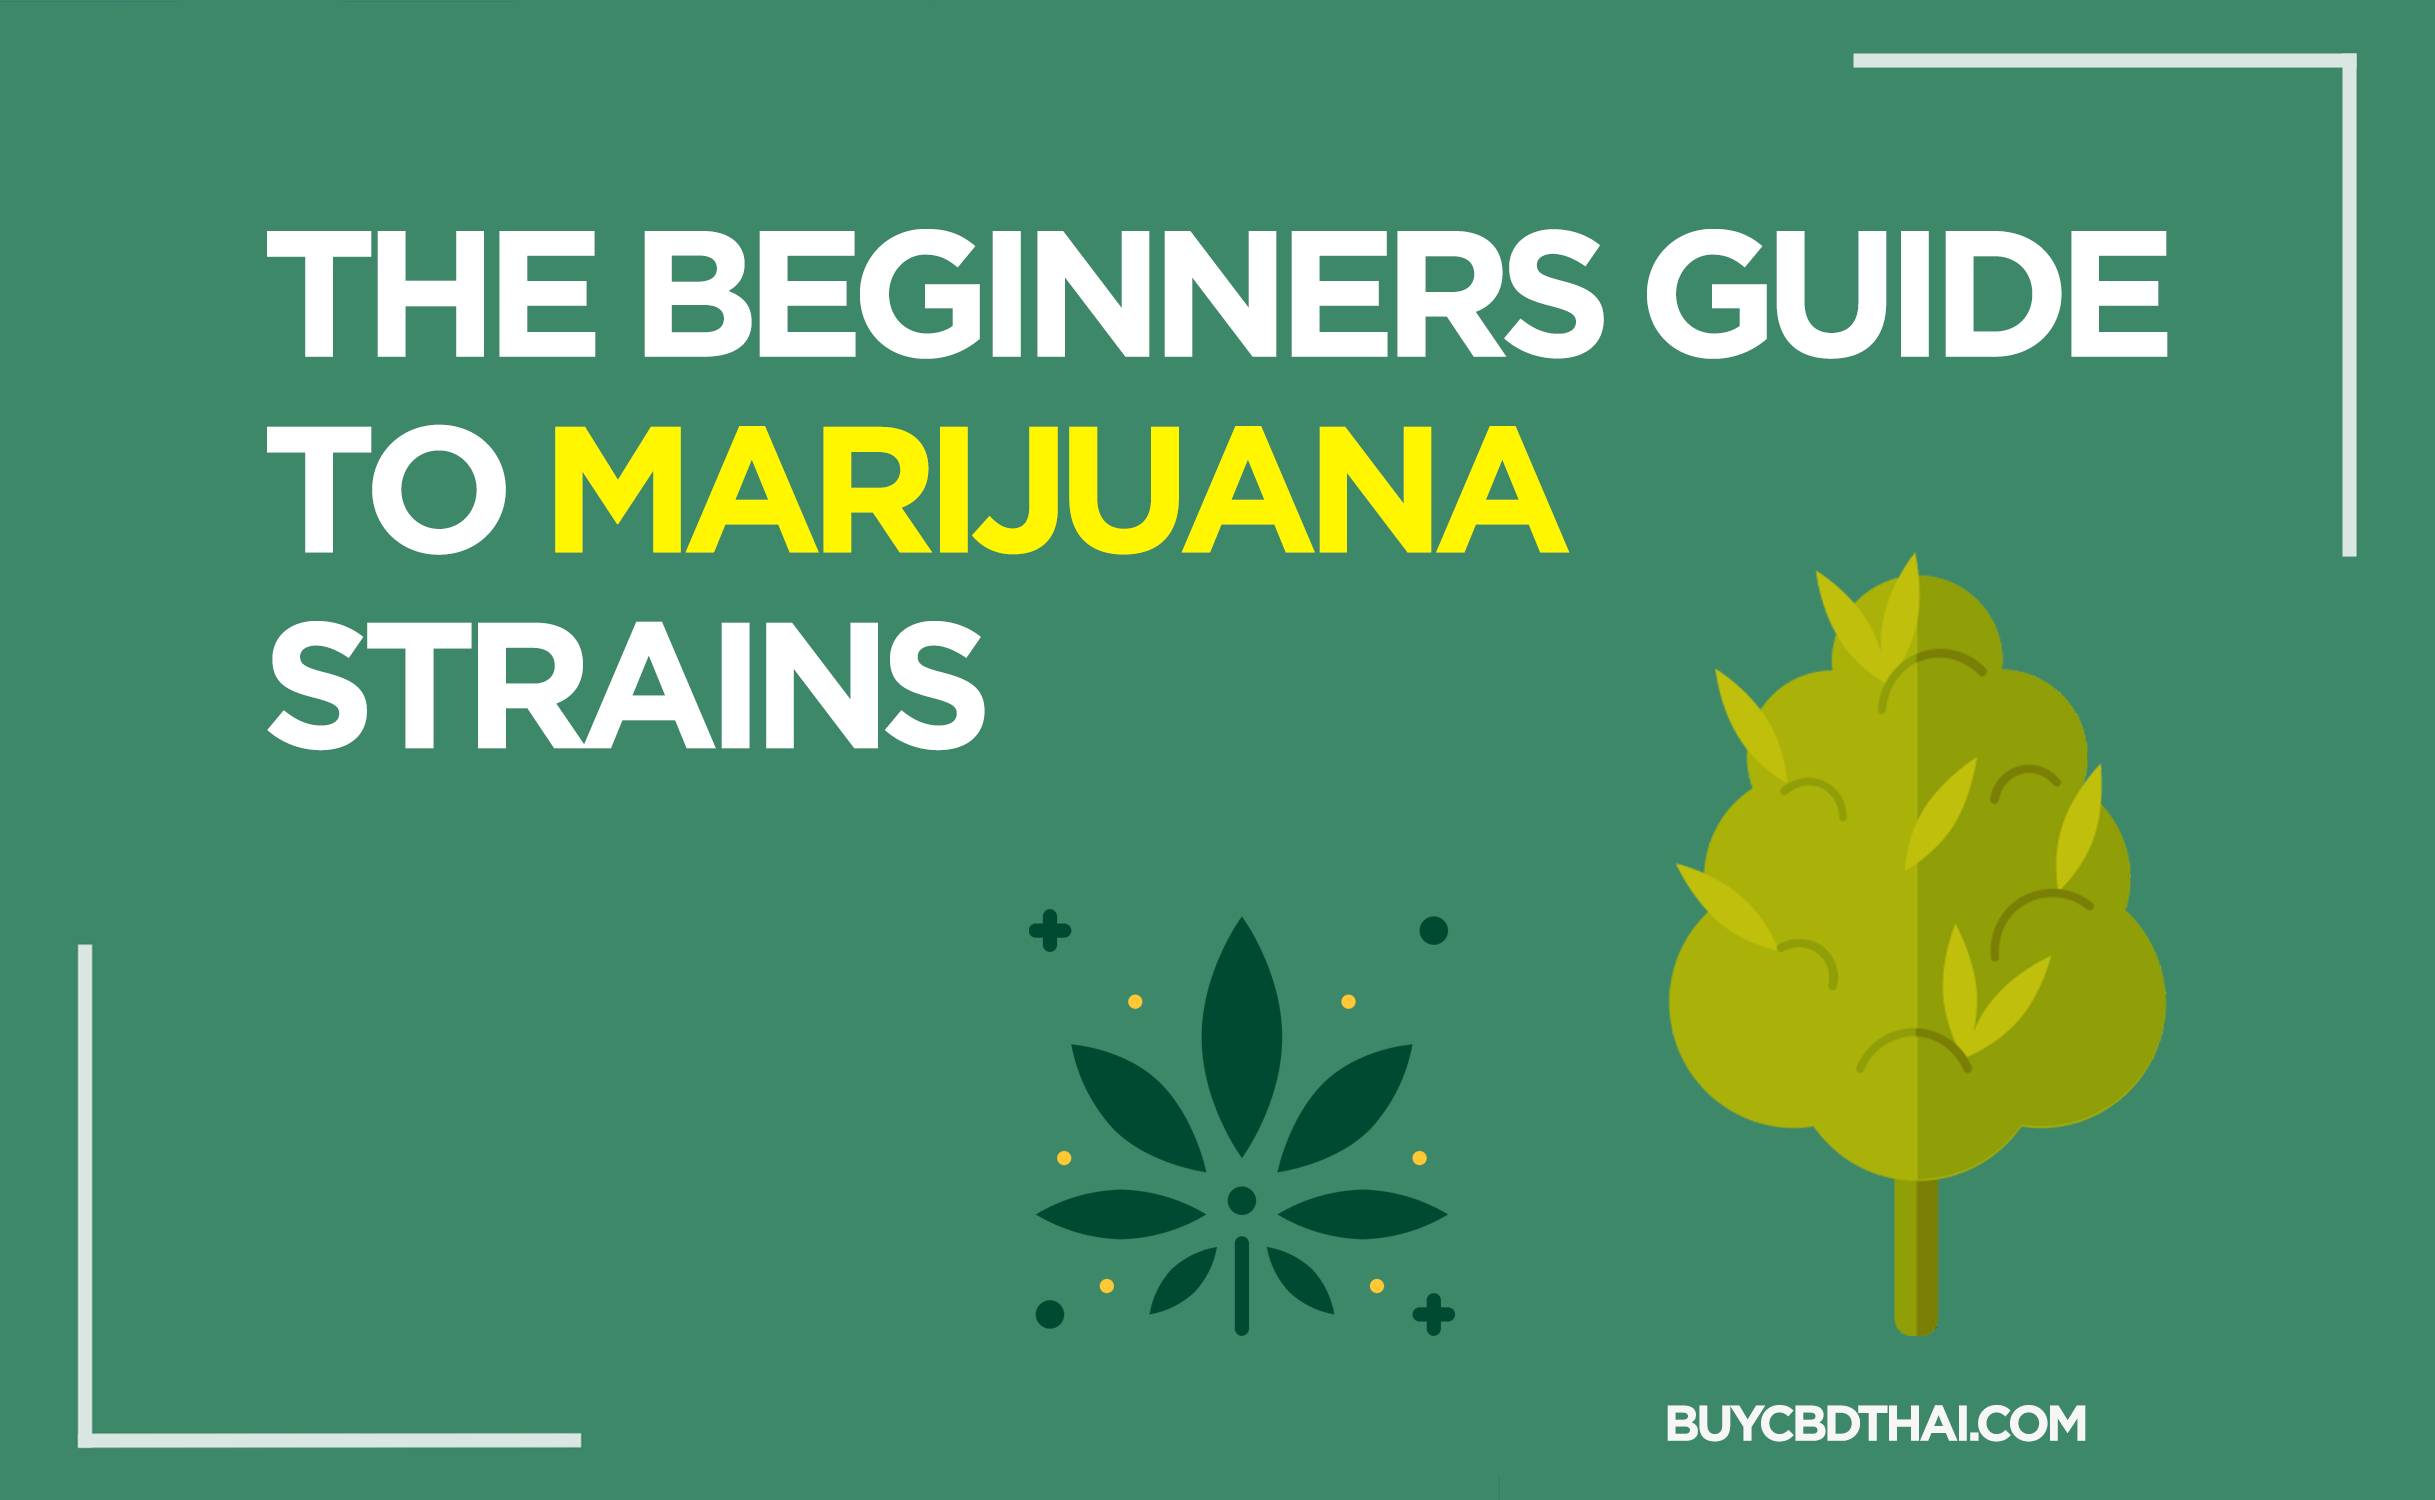 The Beginners Guide to Marijuana Strains